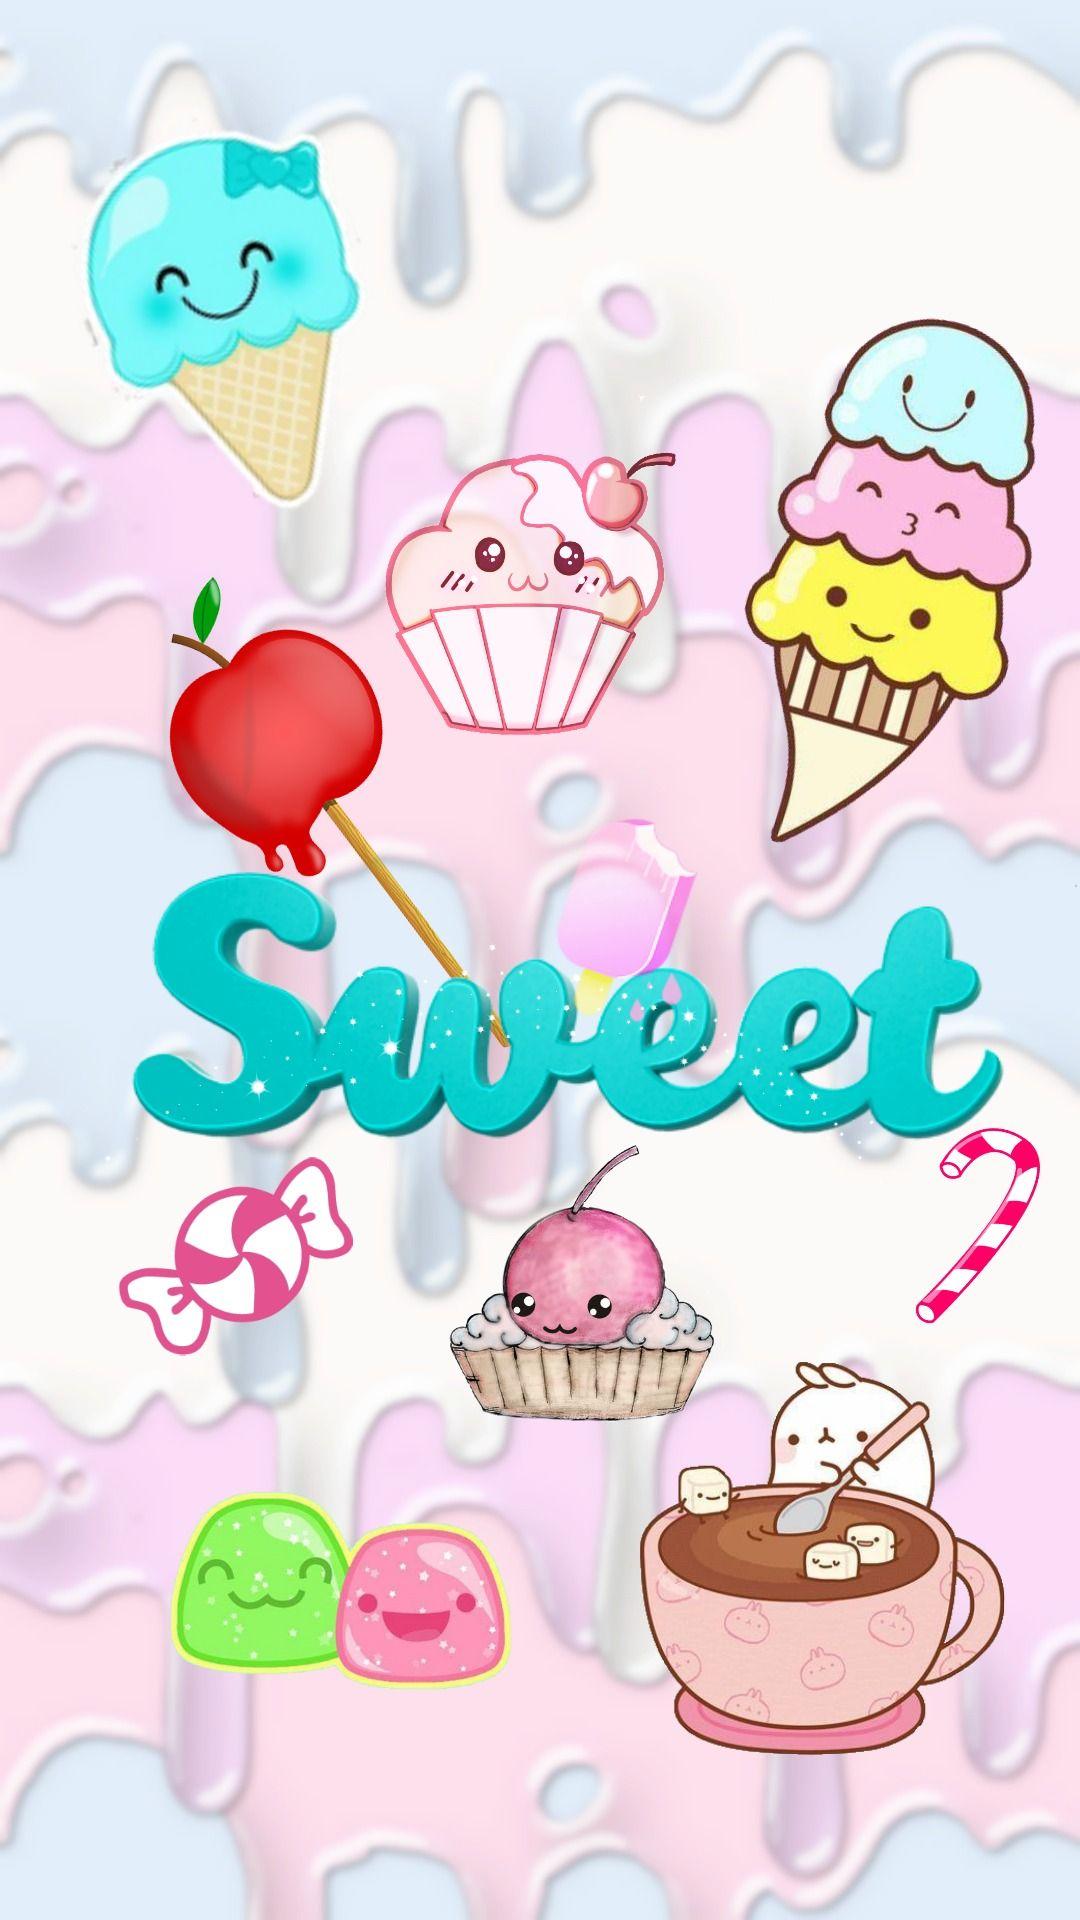 Cute Kawaii iPhone Wallpapers - Top Free Cute Kawaii iPhone ...